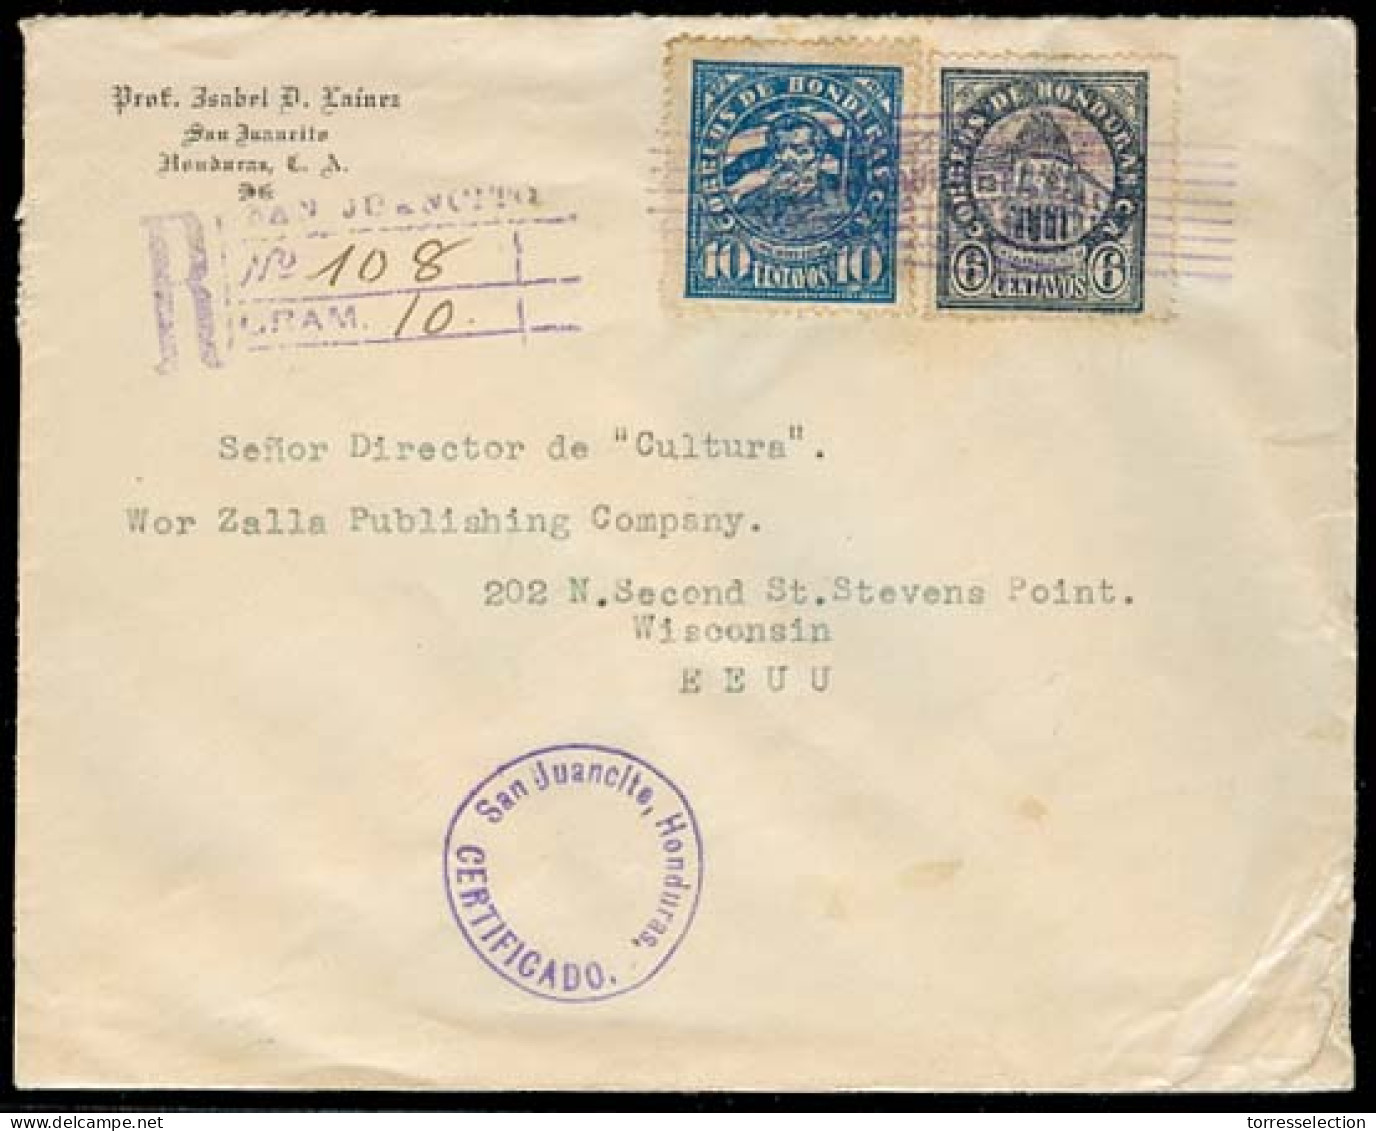 HONDURAS. 1928. San Jacinto - USA. Registered Fkd Env 6c Violet. VF Town Overseas Usage. - Honduras